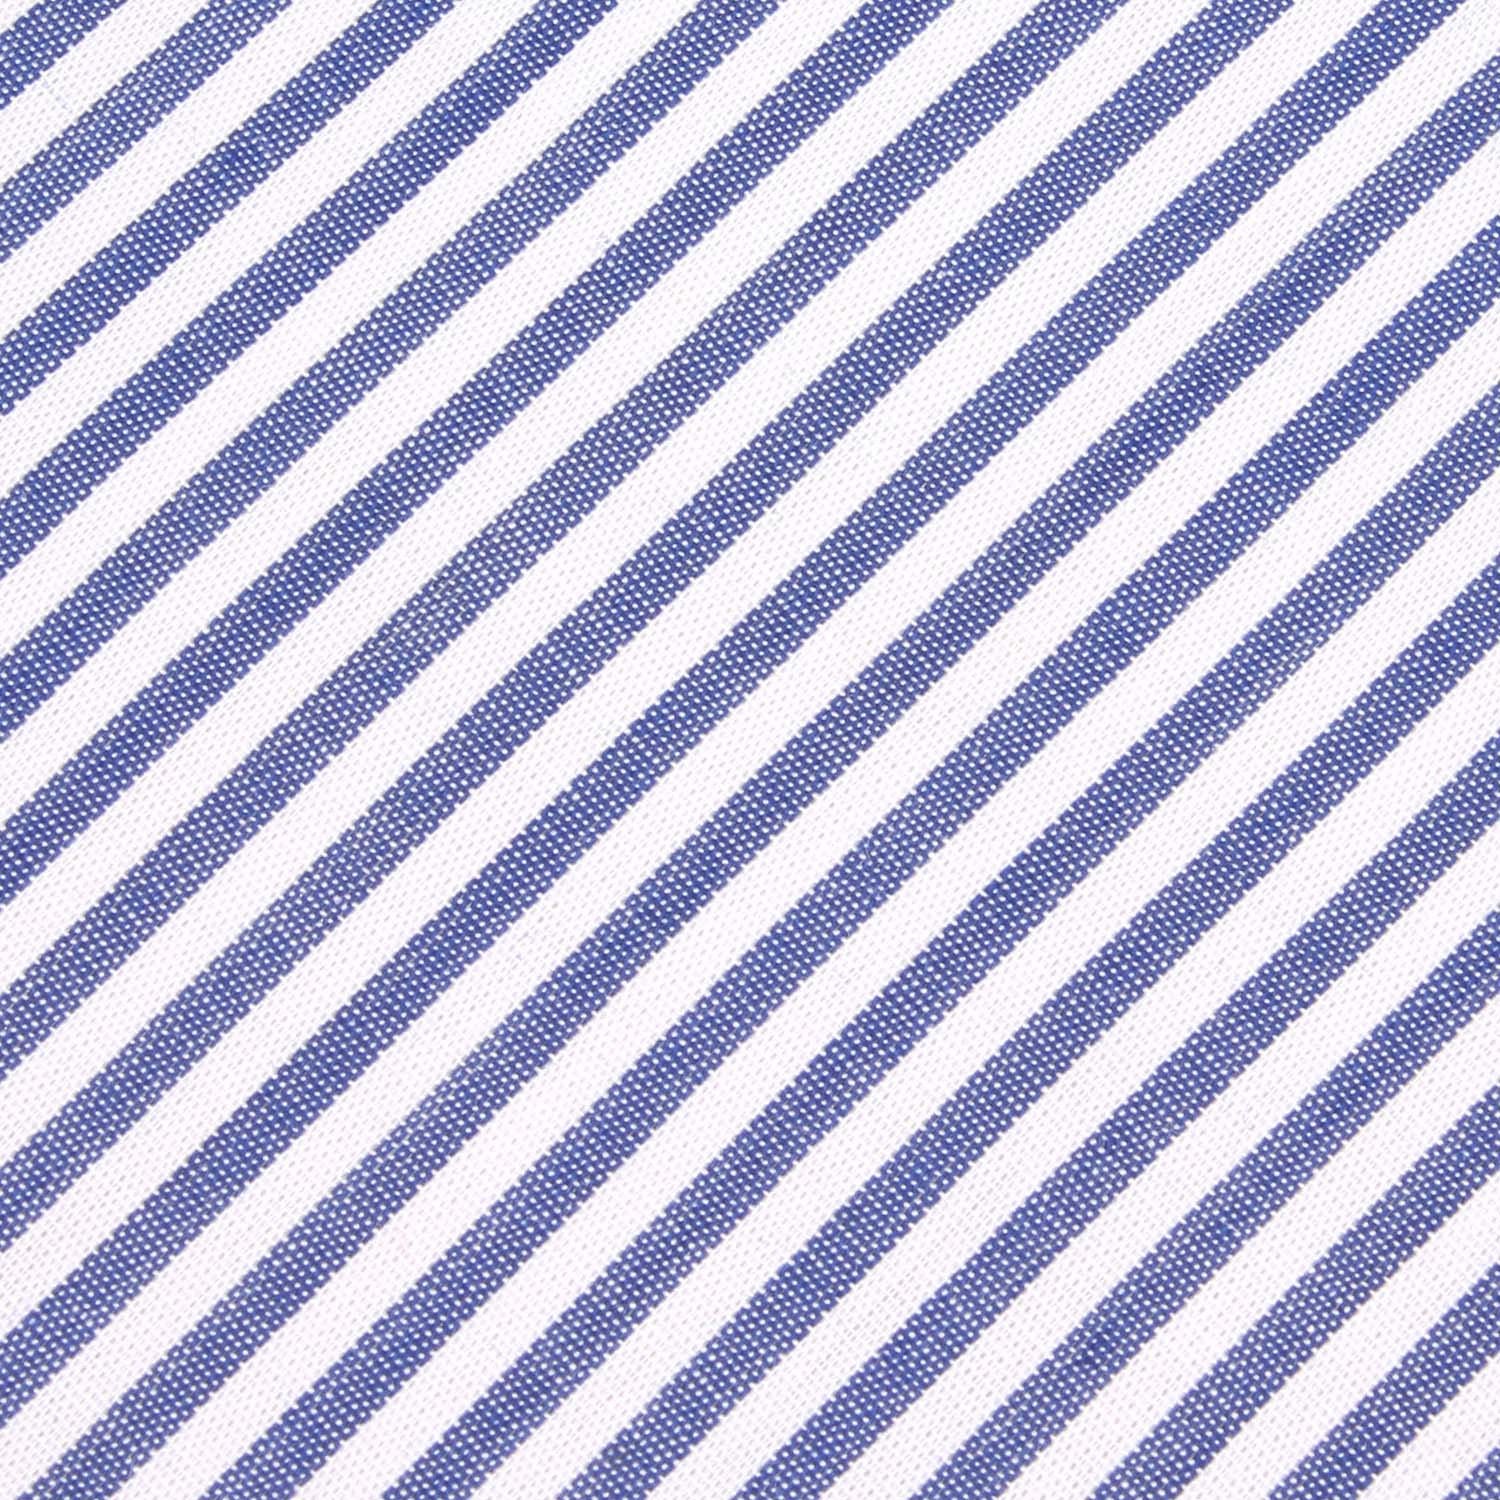 Blue and White Chalk Stripes Cotton Fabric Pocket Square C004